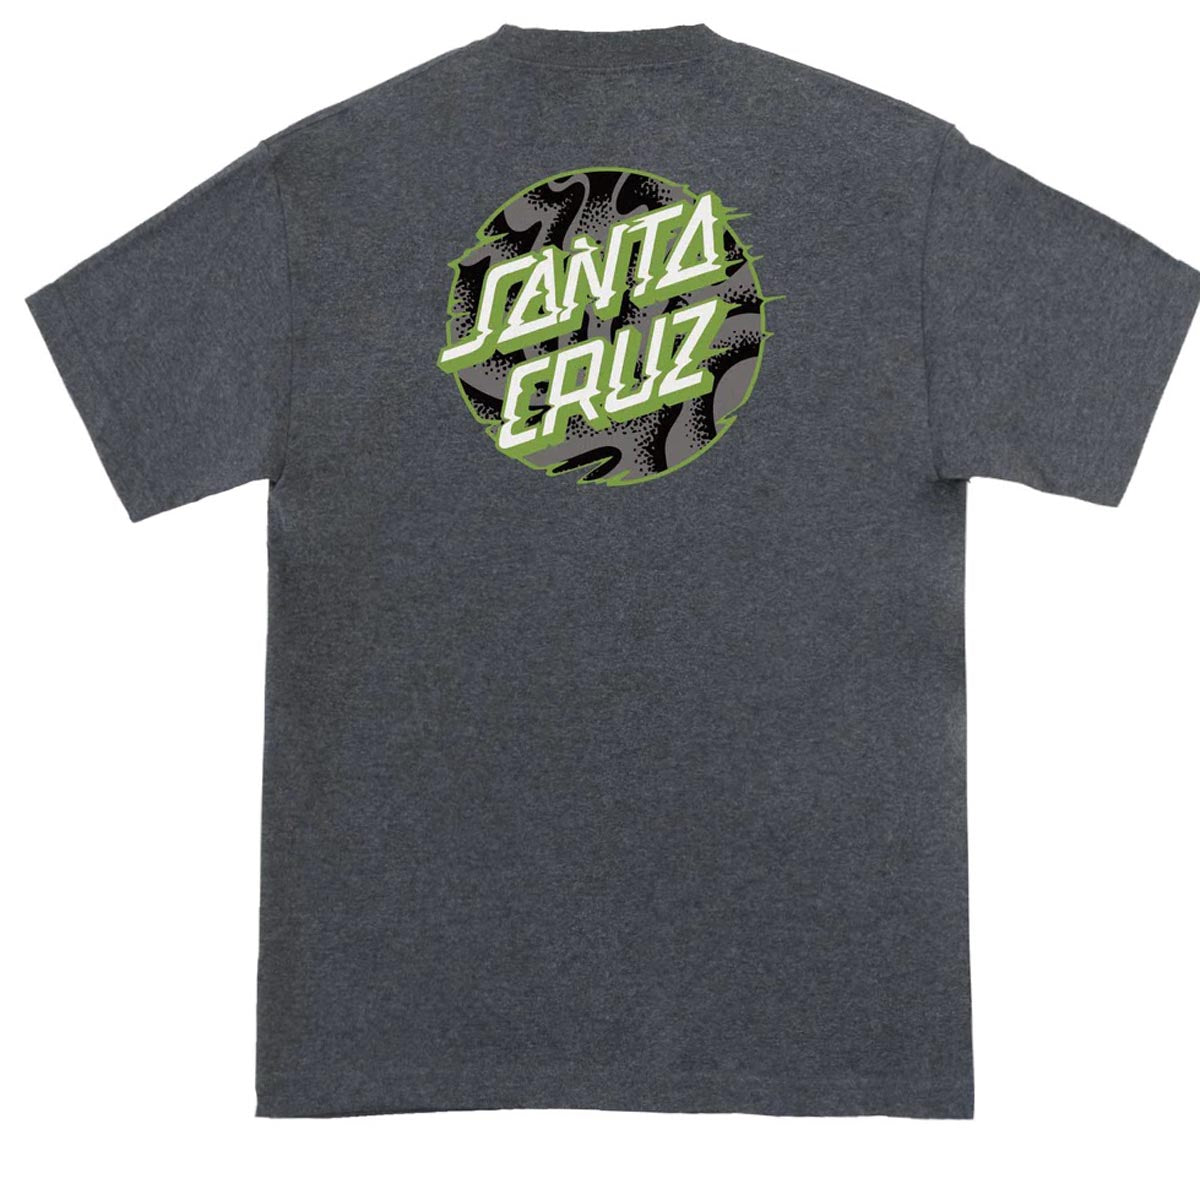 Santa Cruz Vivid Slick Dot T-Shirt - Eco Charcoal Heather image 1